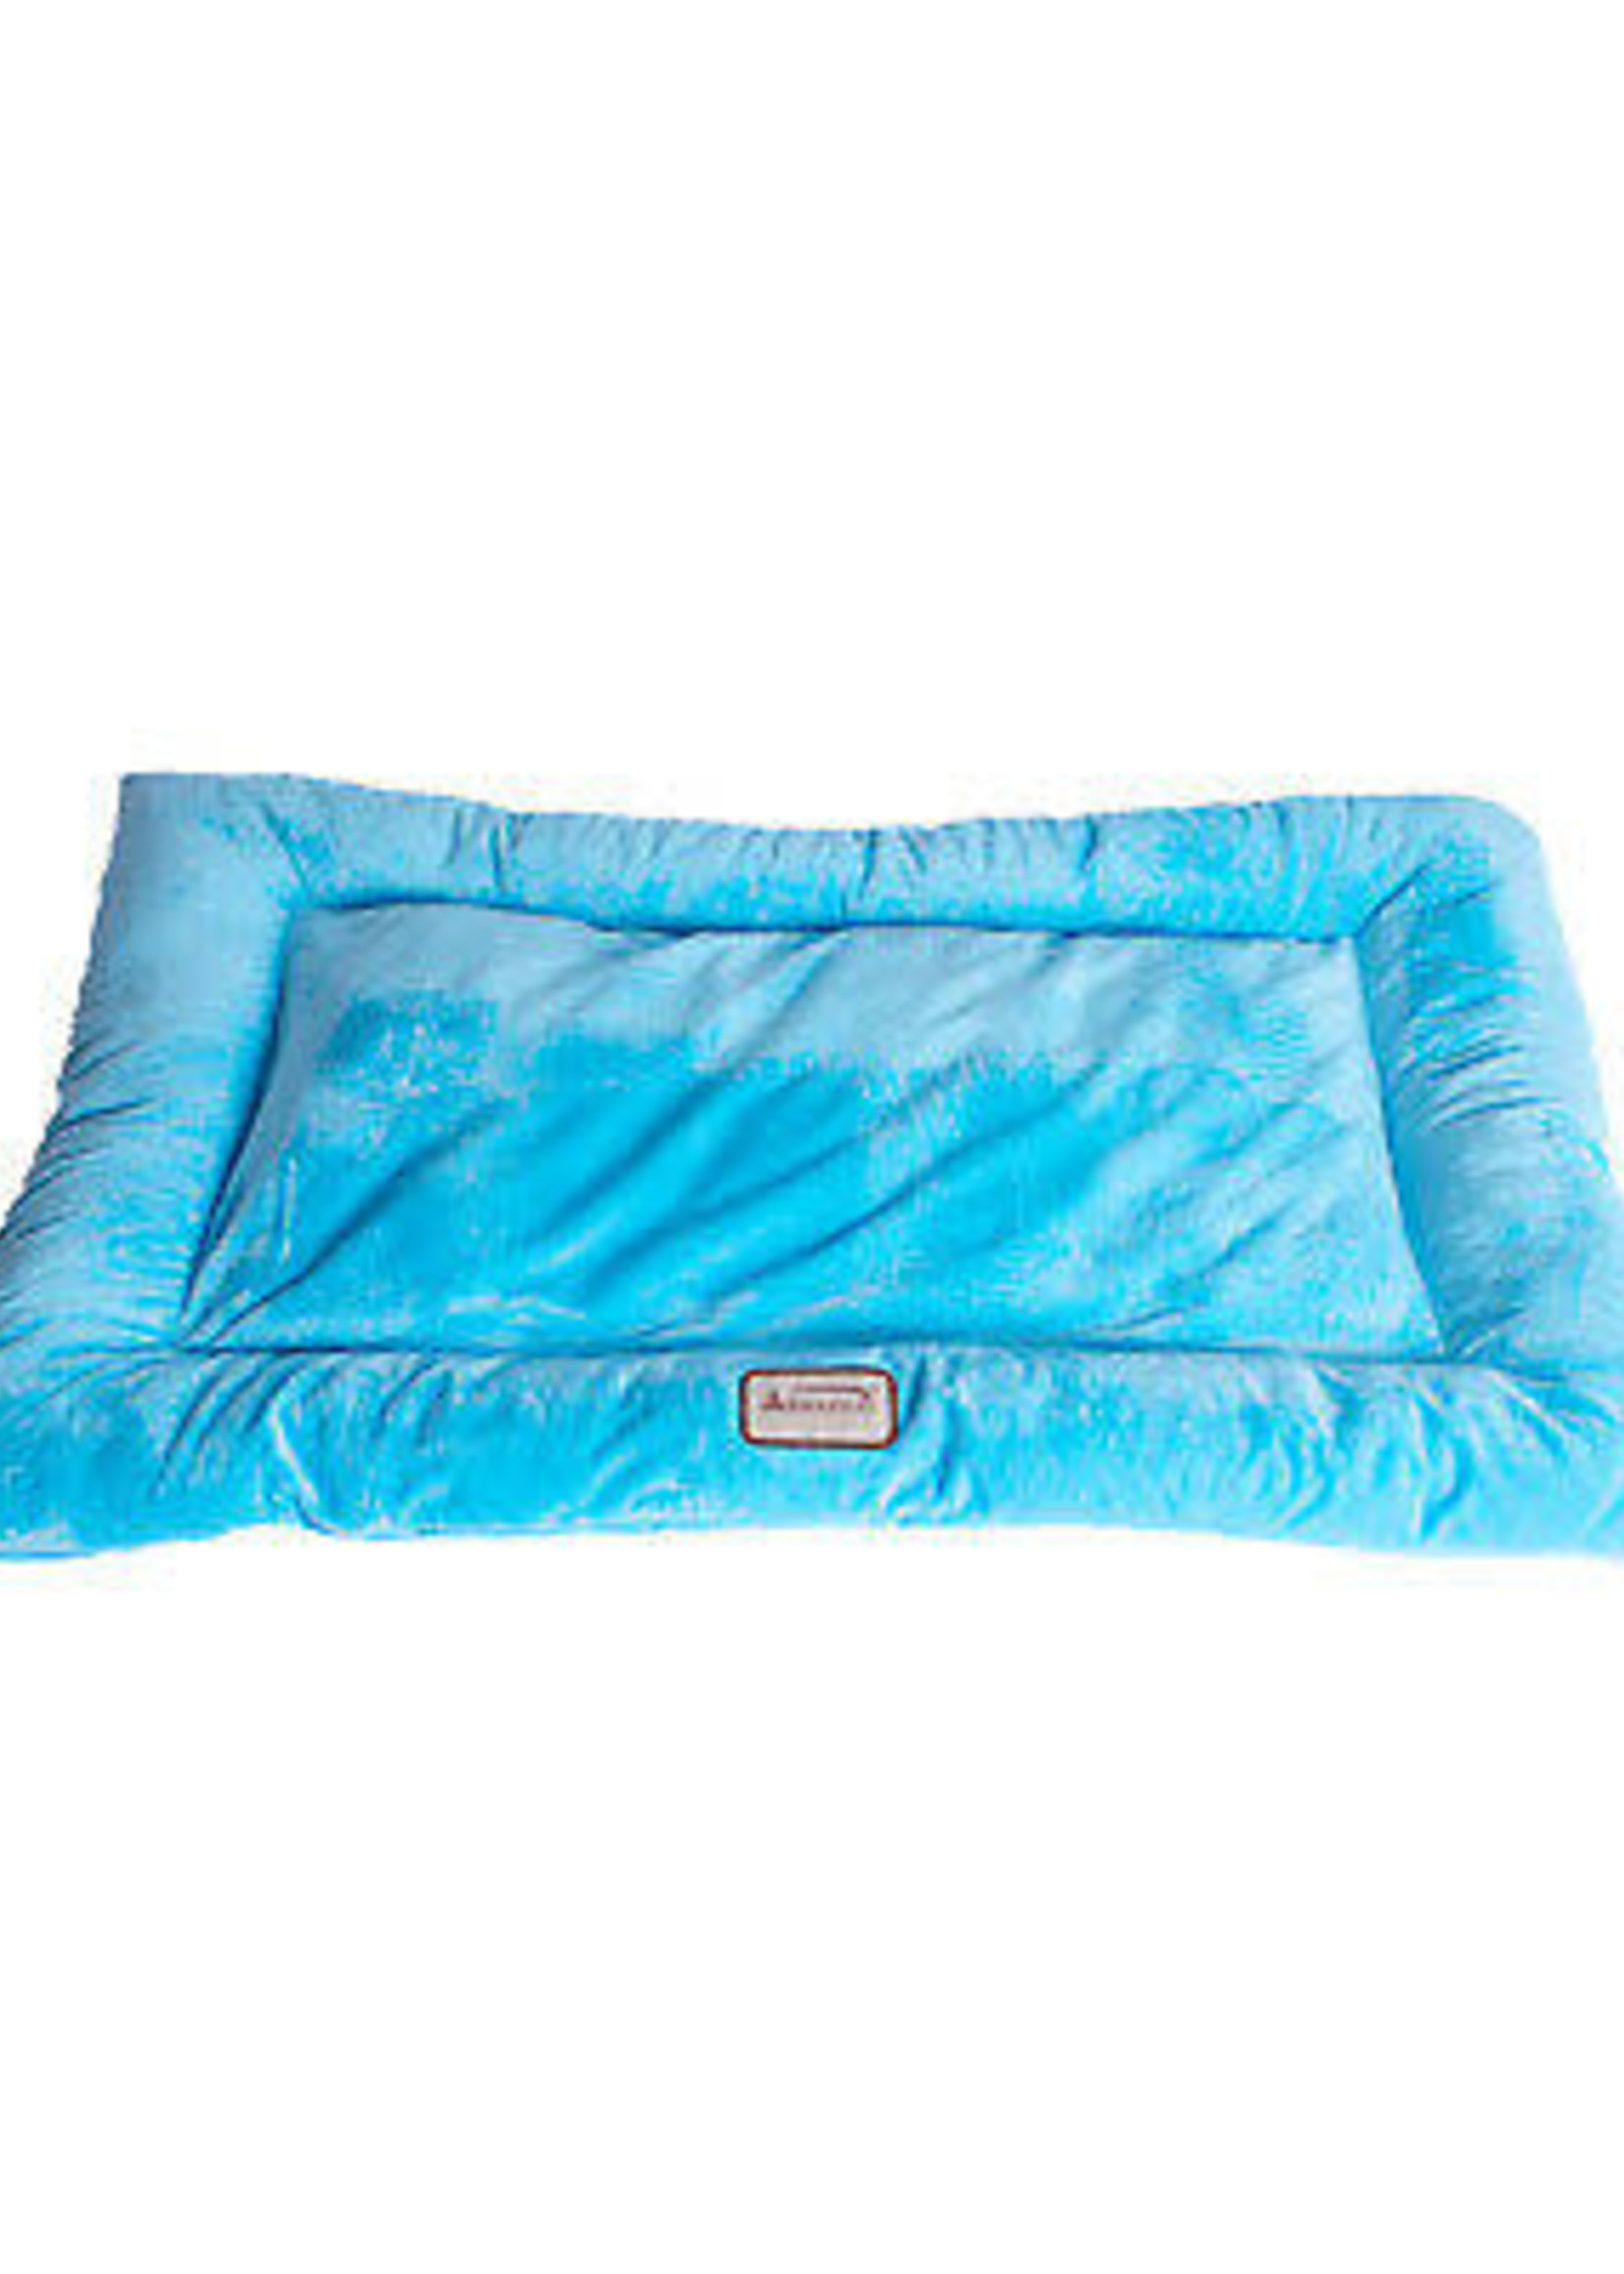 Armarkat Armarkat Large Dog Crate Soft Pad Mat w/Poly Fill Cushion Sky Blue